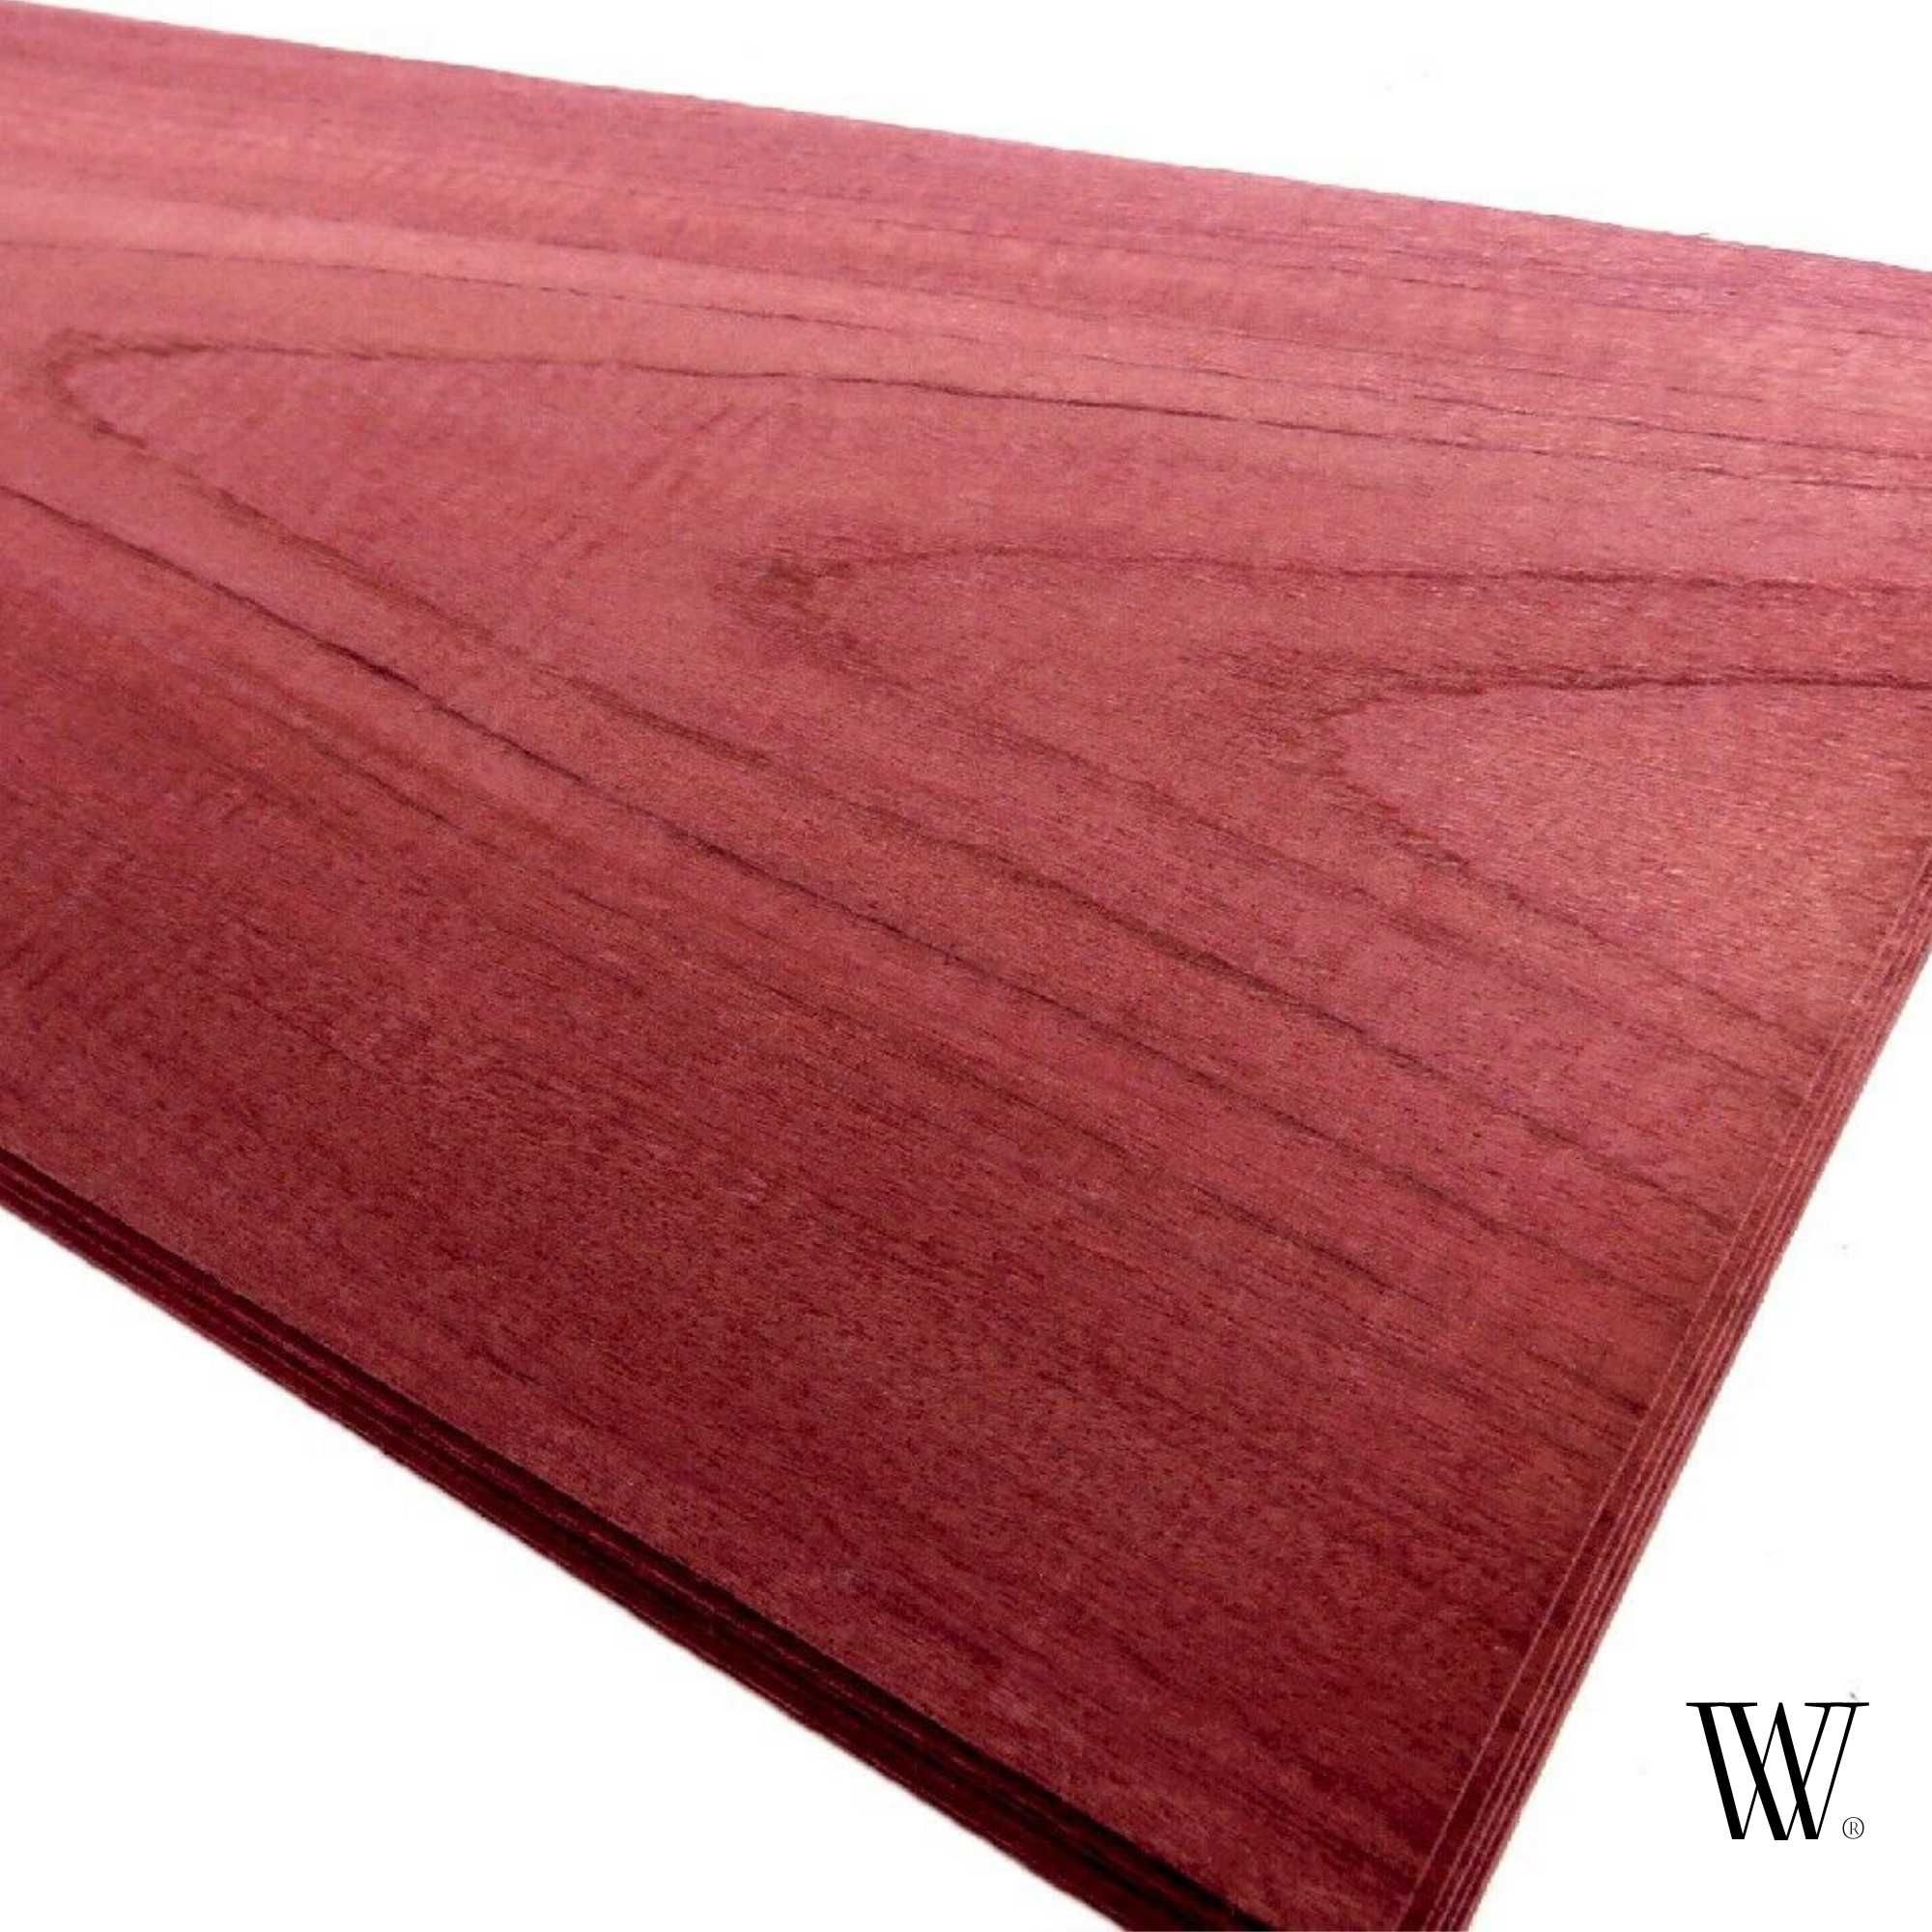 Pau Roxo - folha de madeira / Purpleheart veneer